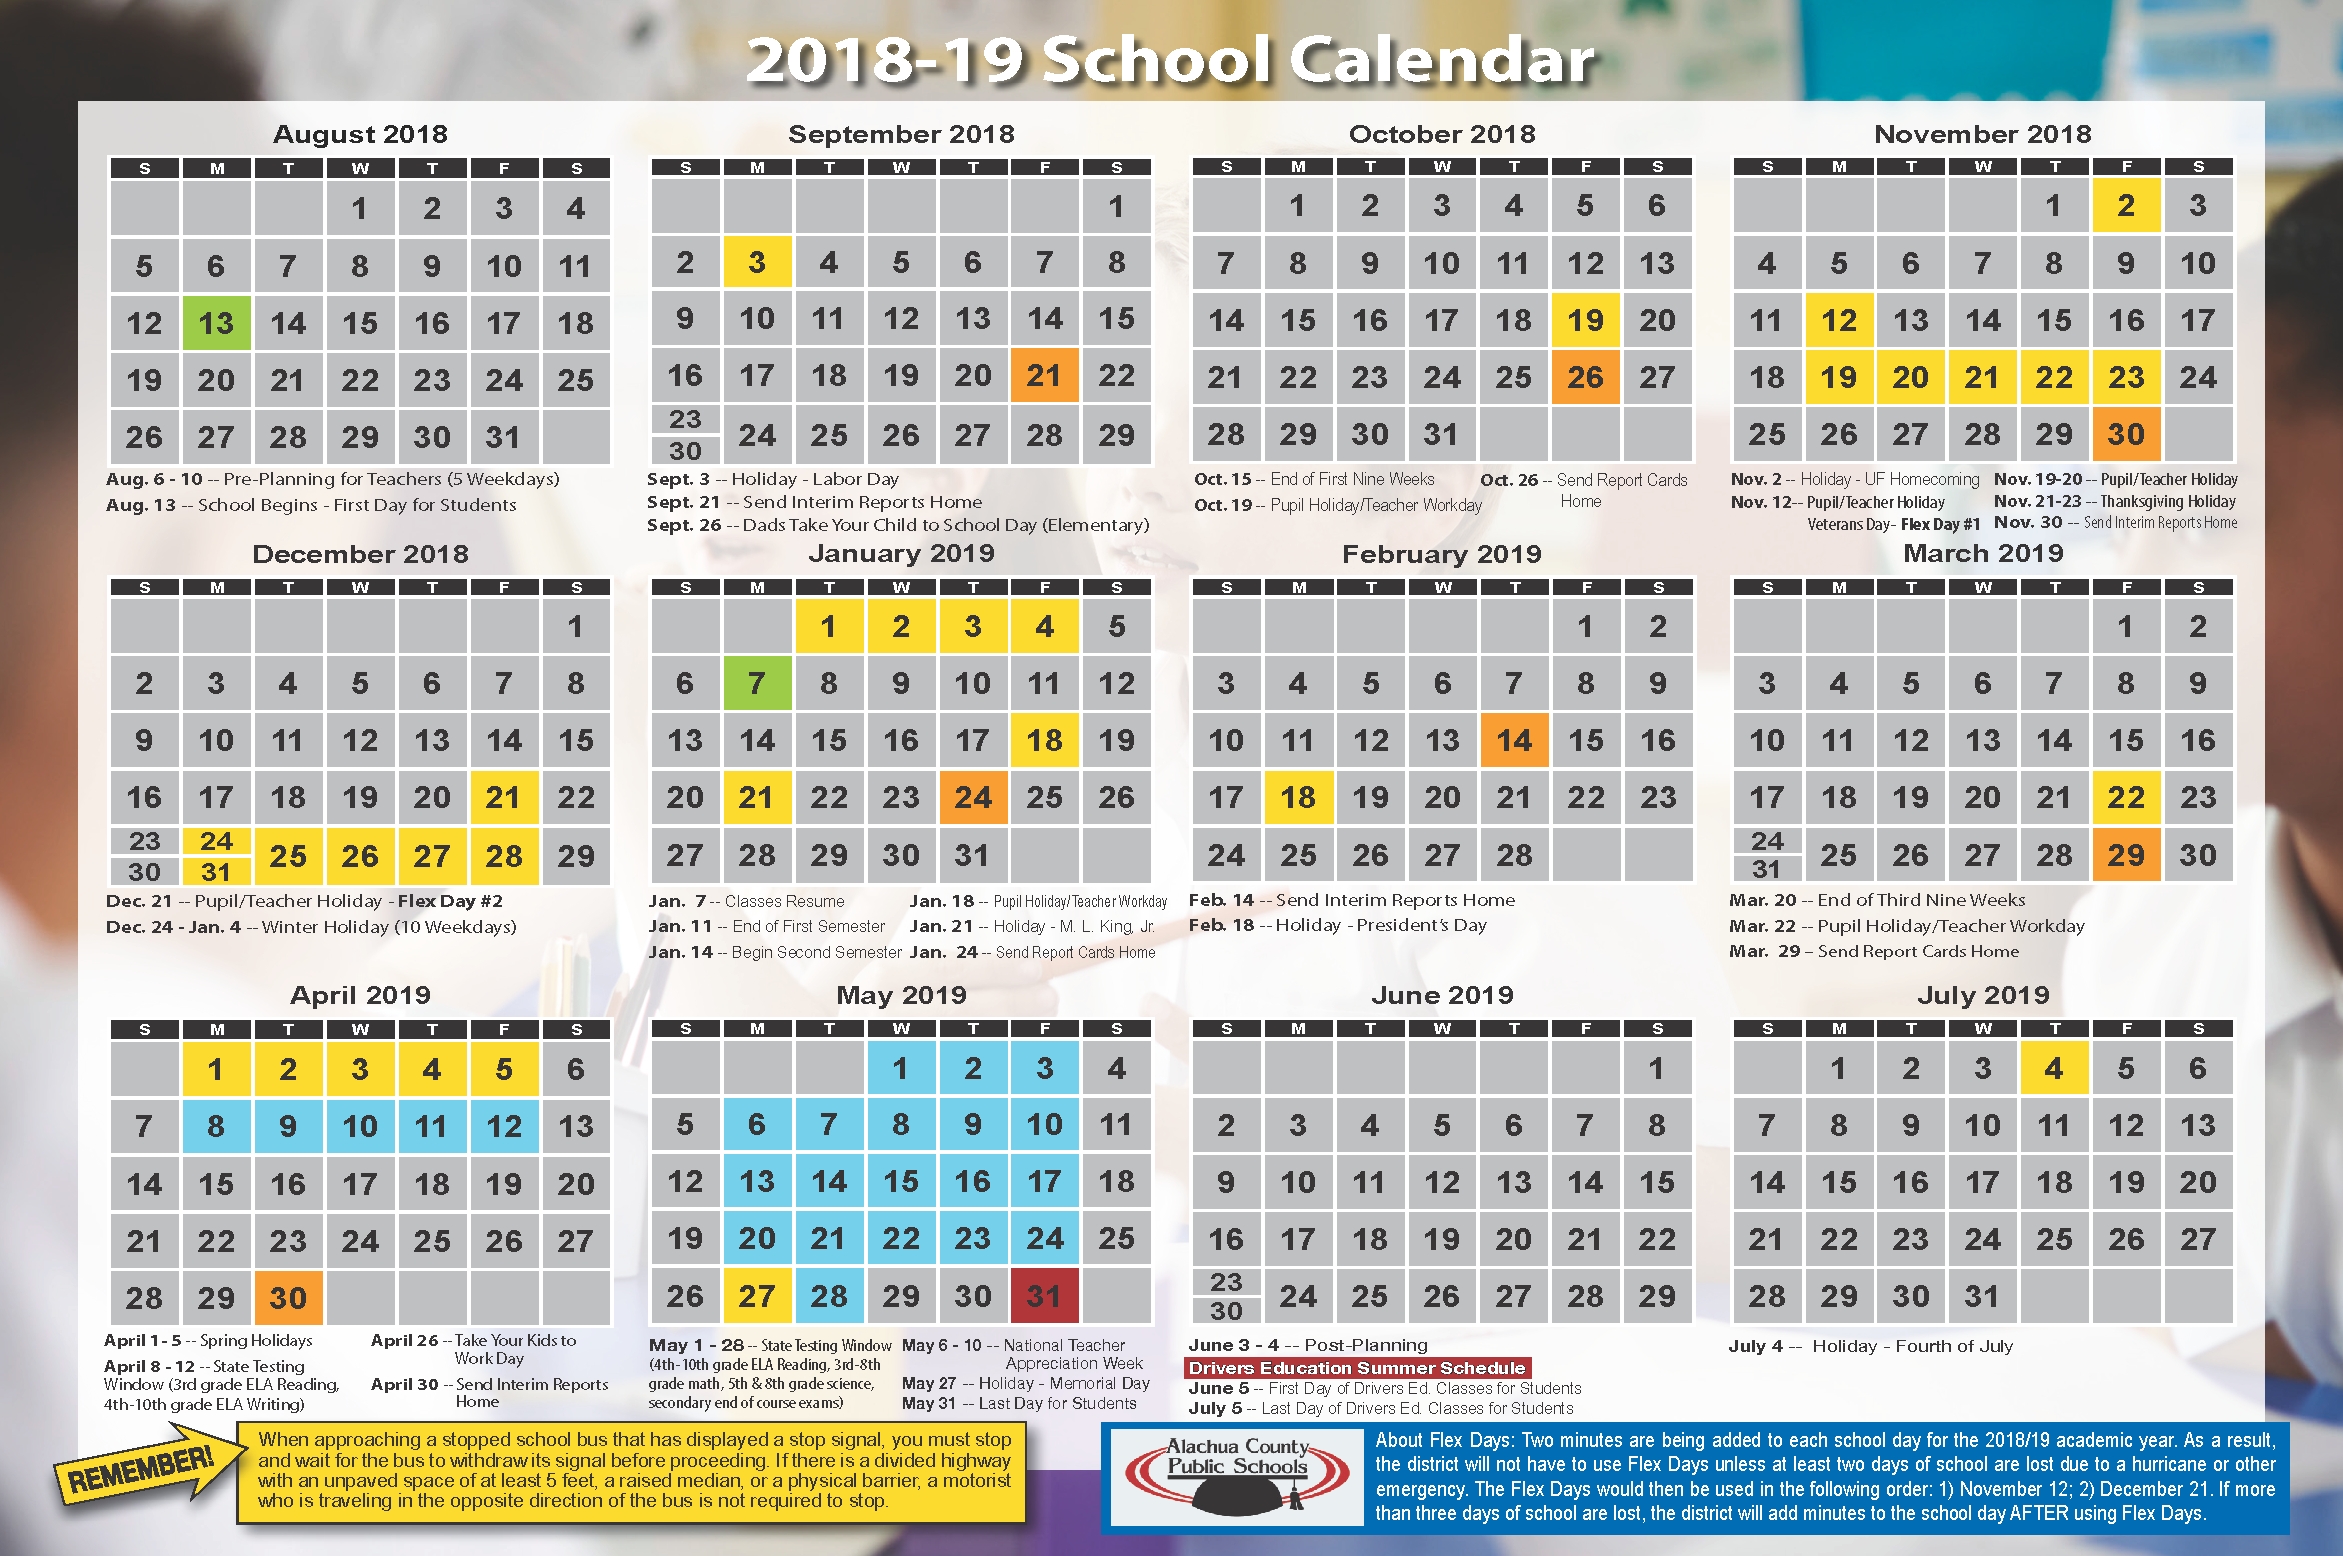 ✅Duval County School Calendar - You Calendars School Calendar Lee County Florida